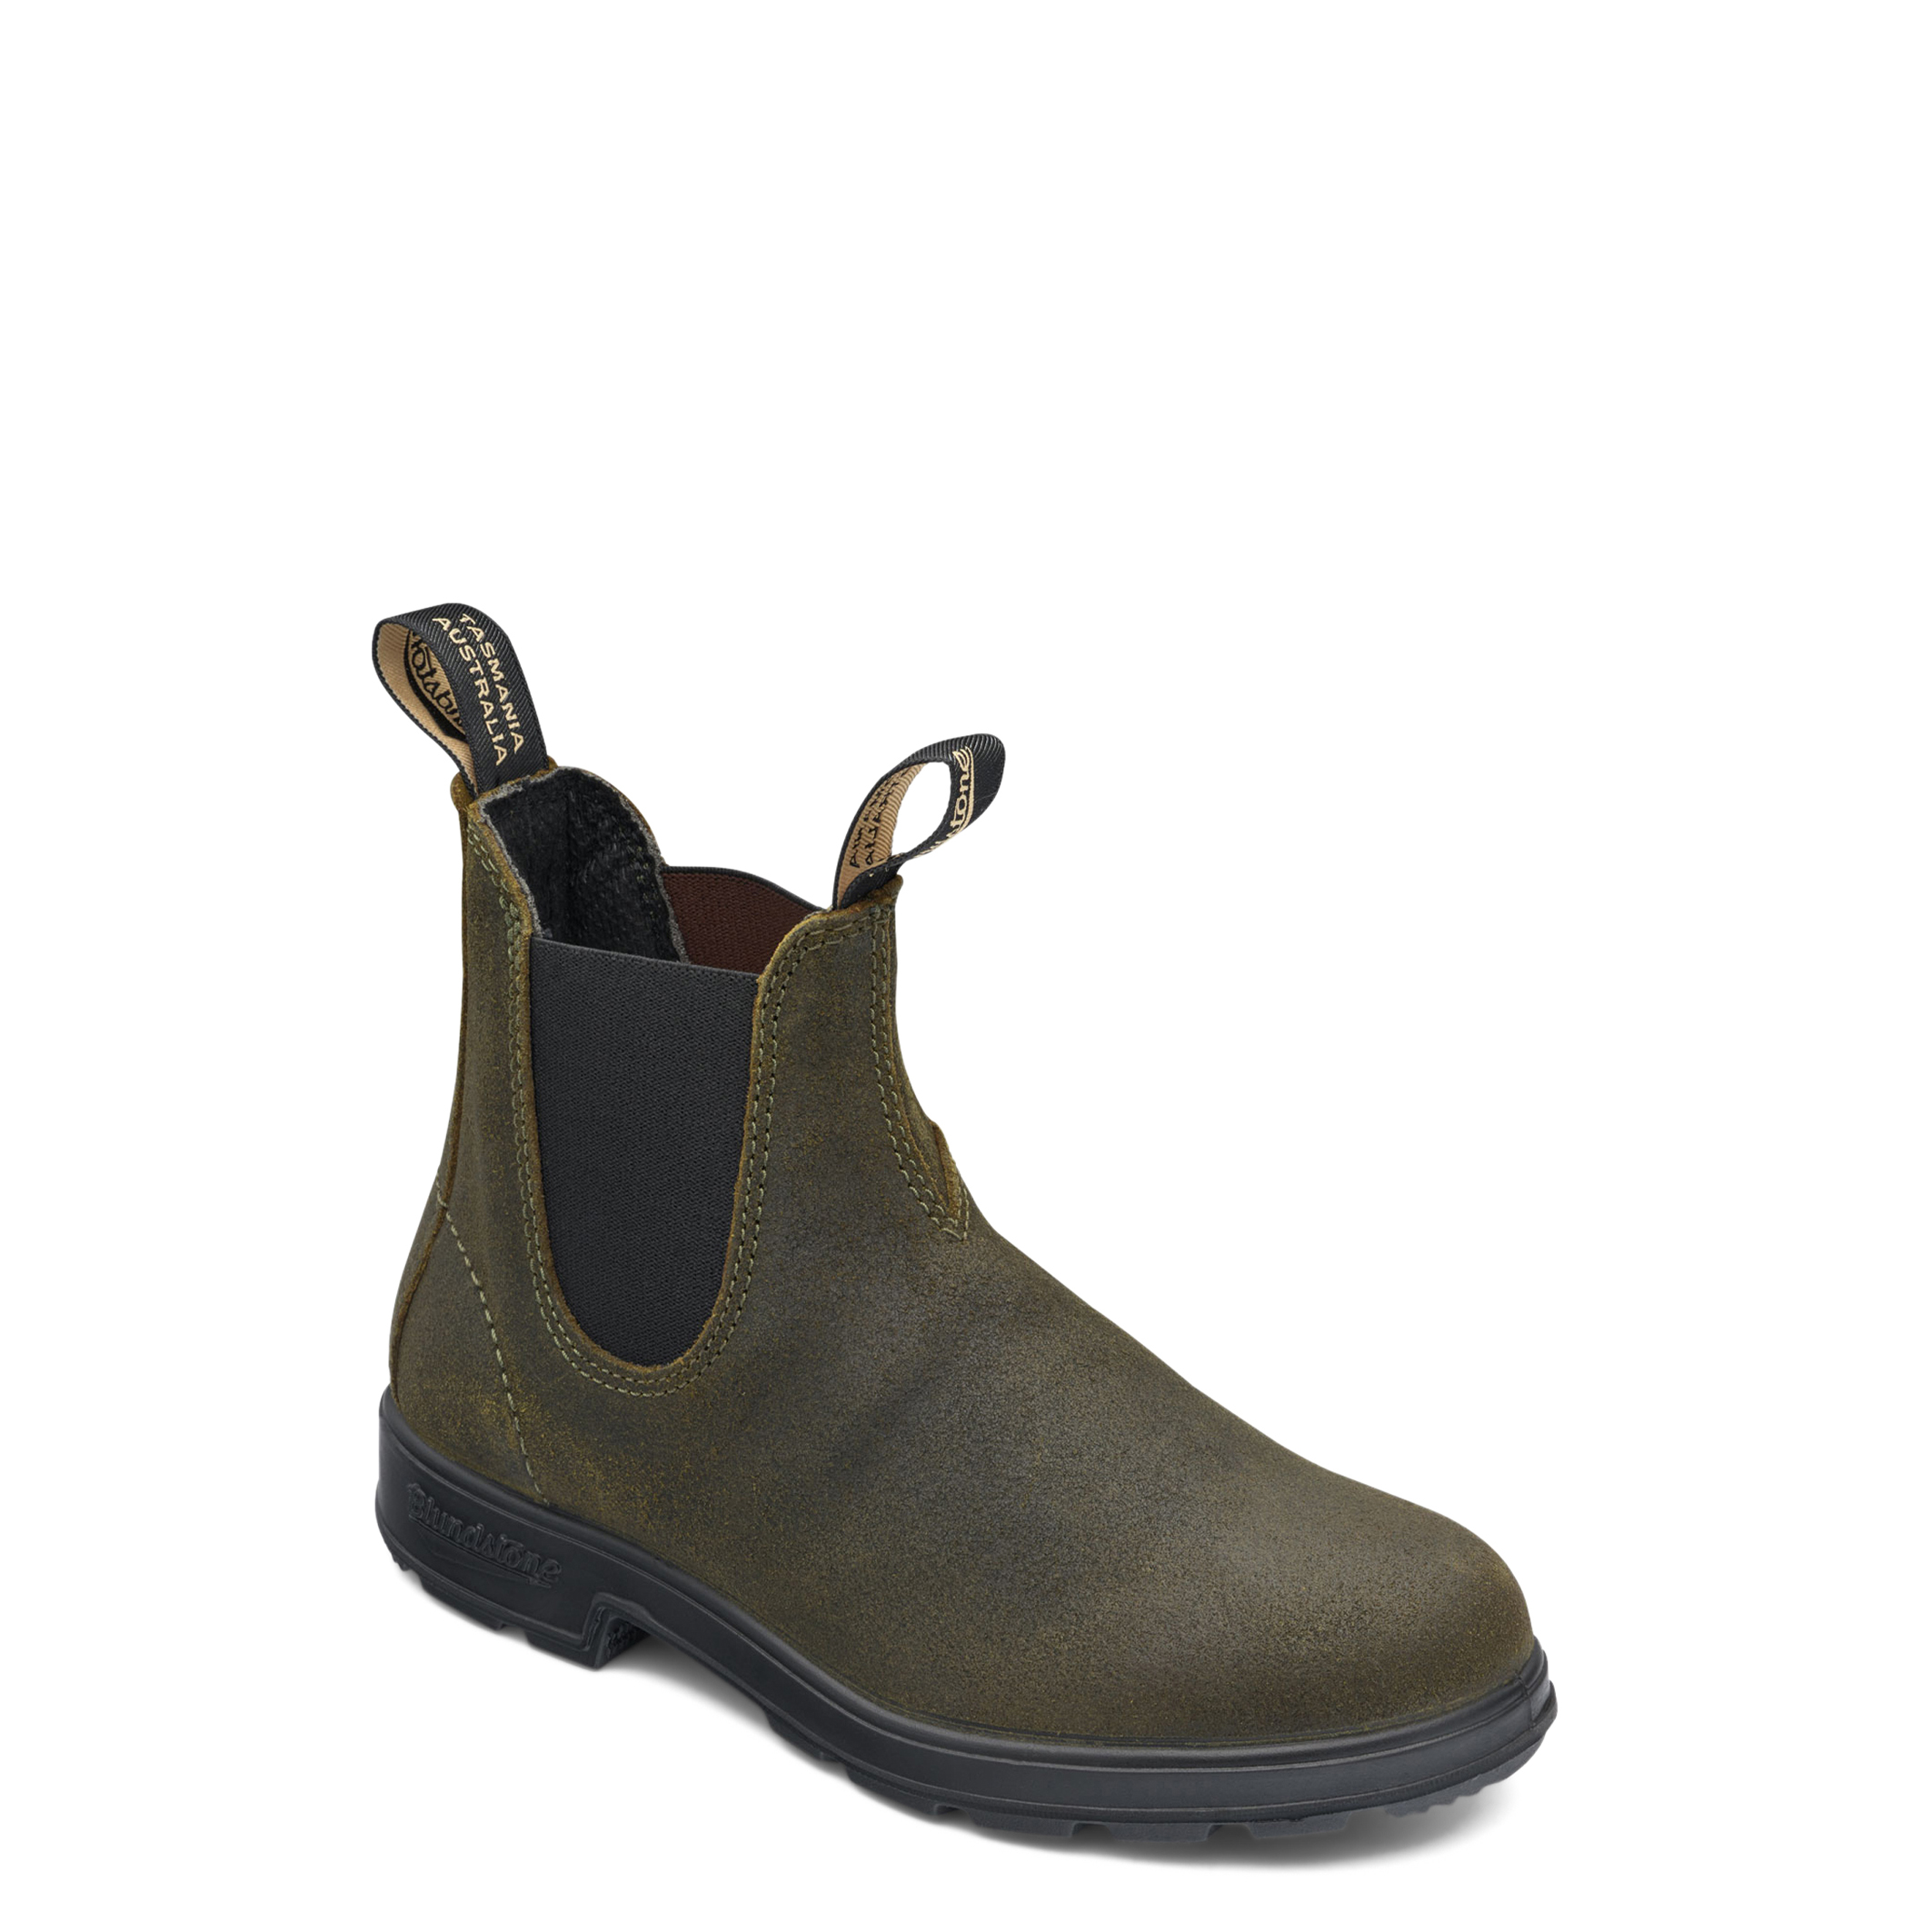 Blundstone Green Ankle boots for Men - ORIGINALS-1615